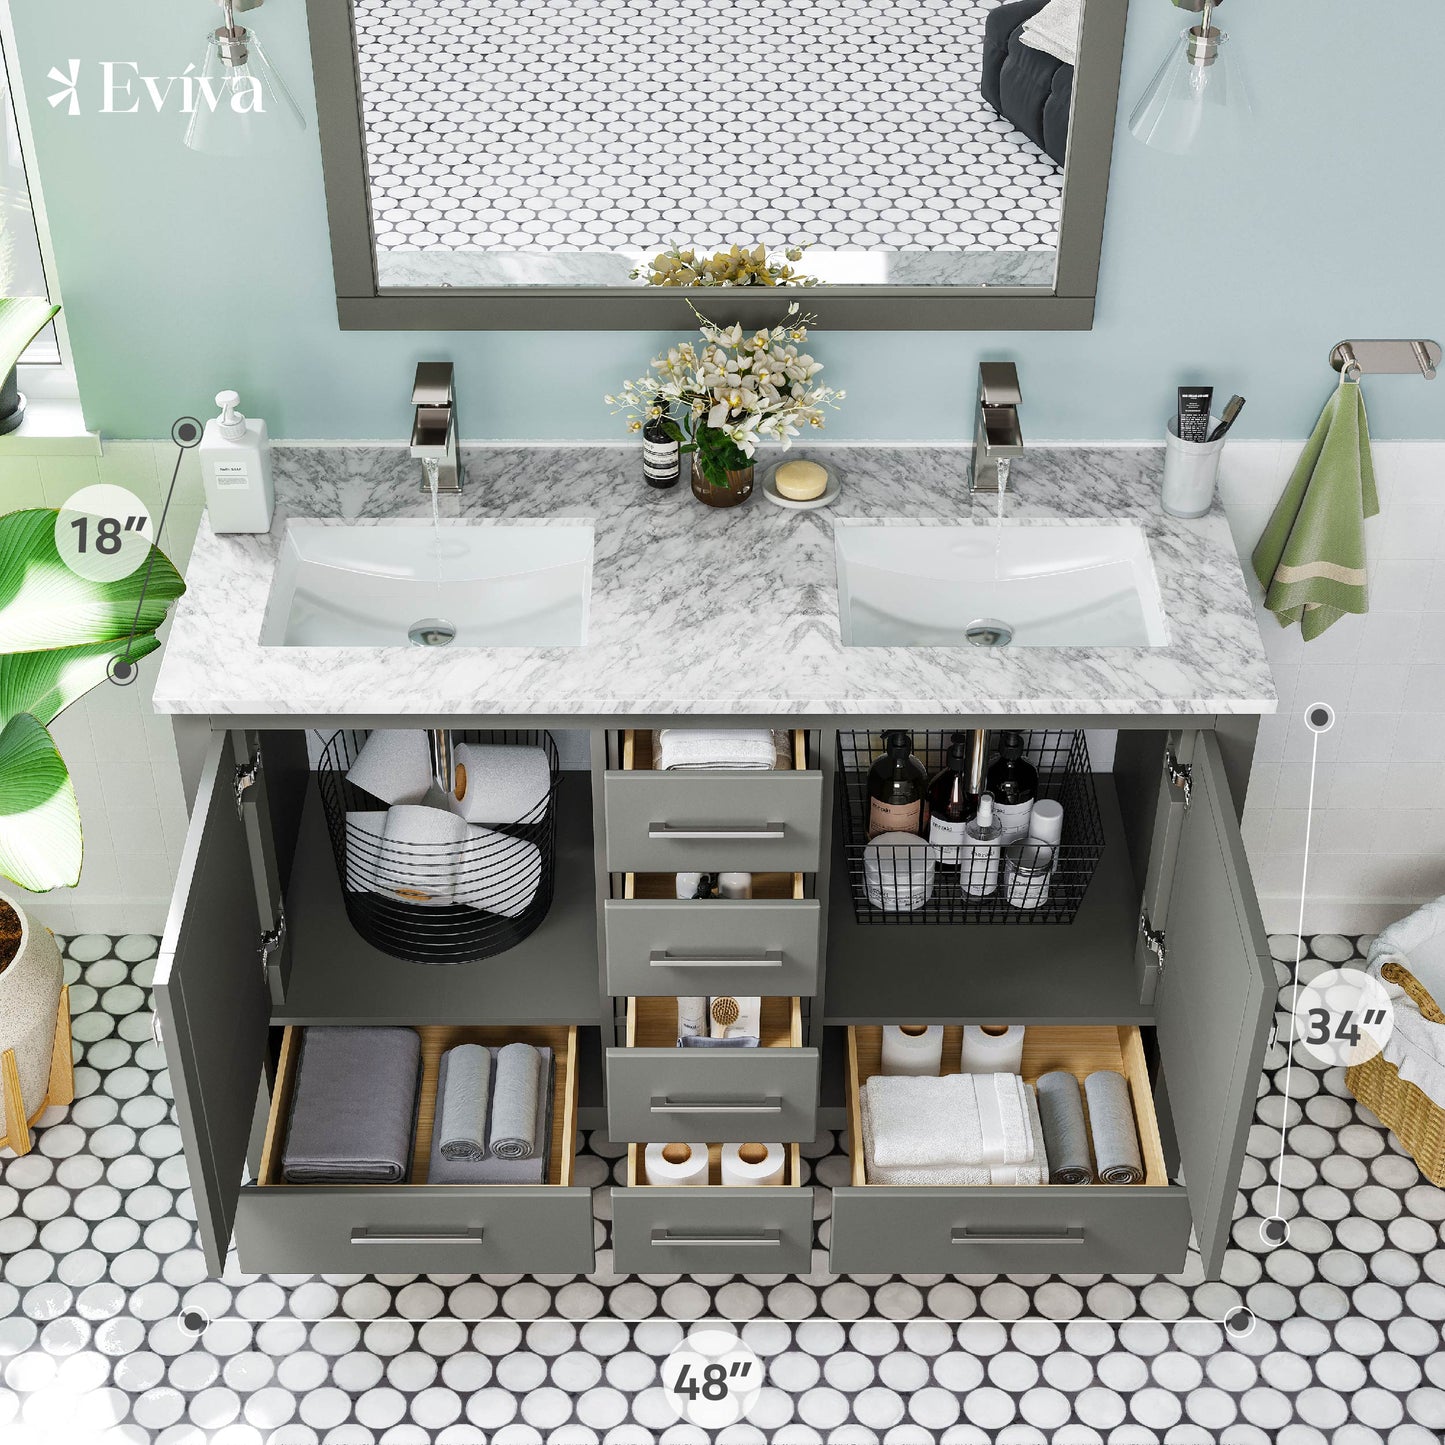 London 48"W x 18"D Gray Bathroom Vanity with Carrara Quartz Countertop and Undermount Porcelain Sink